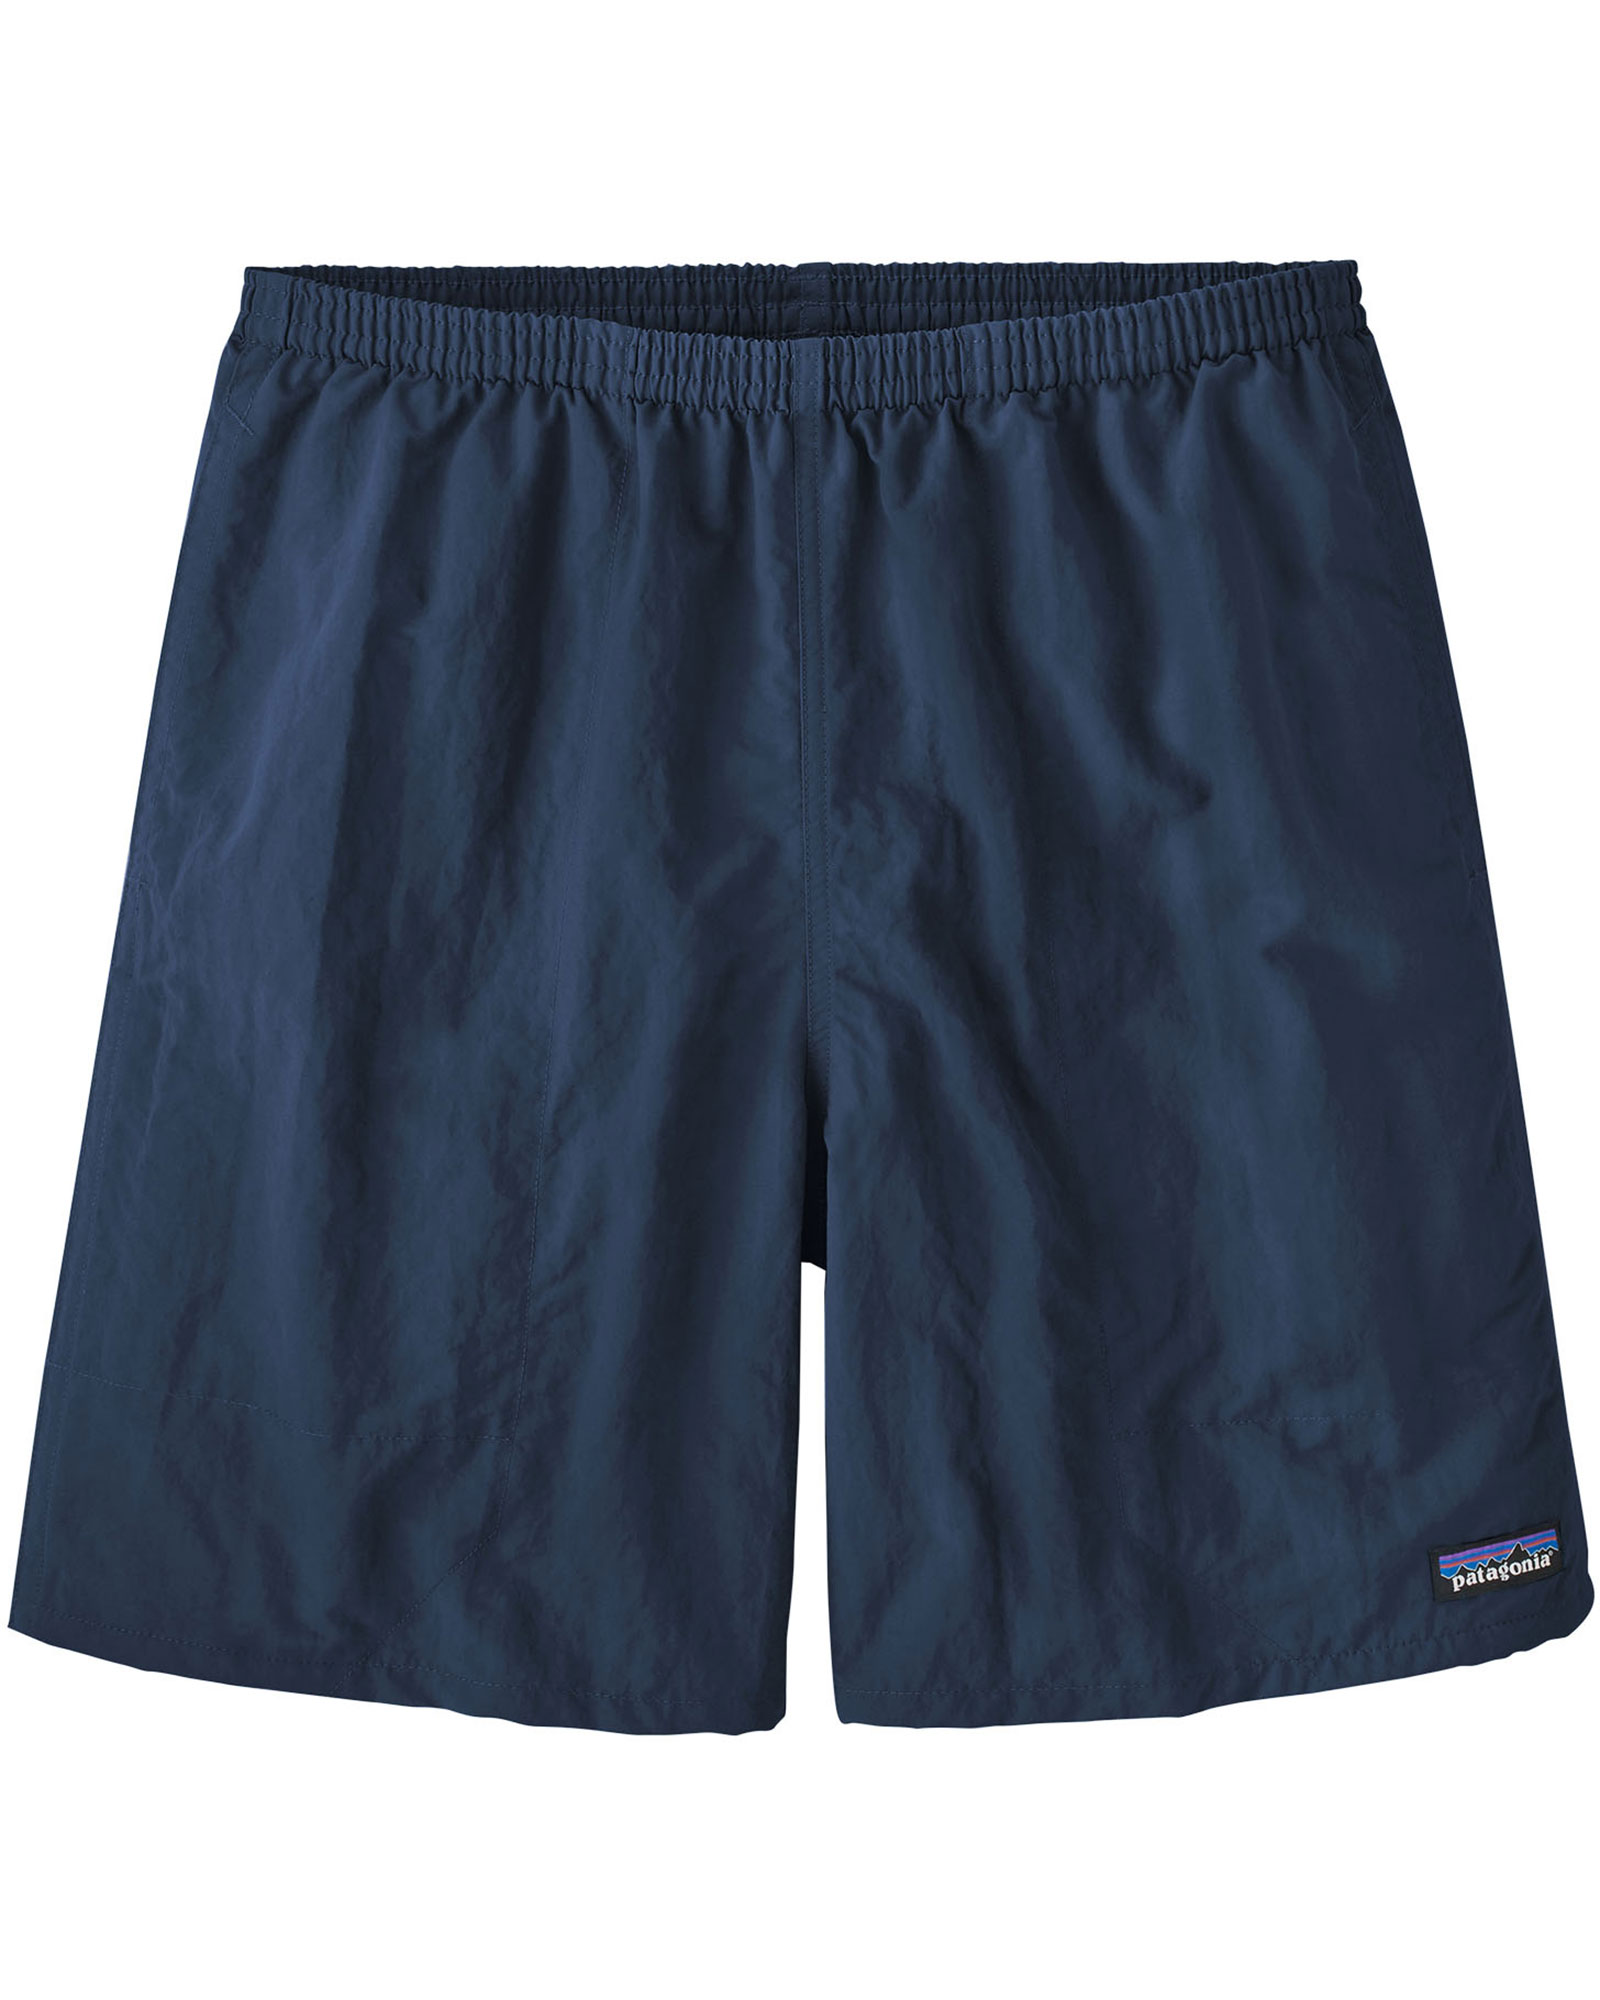 Patagonia Baggies Longs Men’s 7" Shorts - Tidepool Blue S